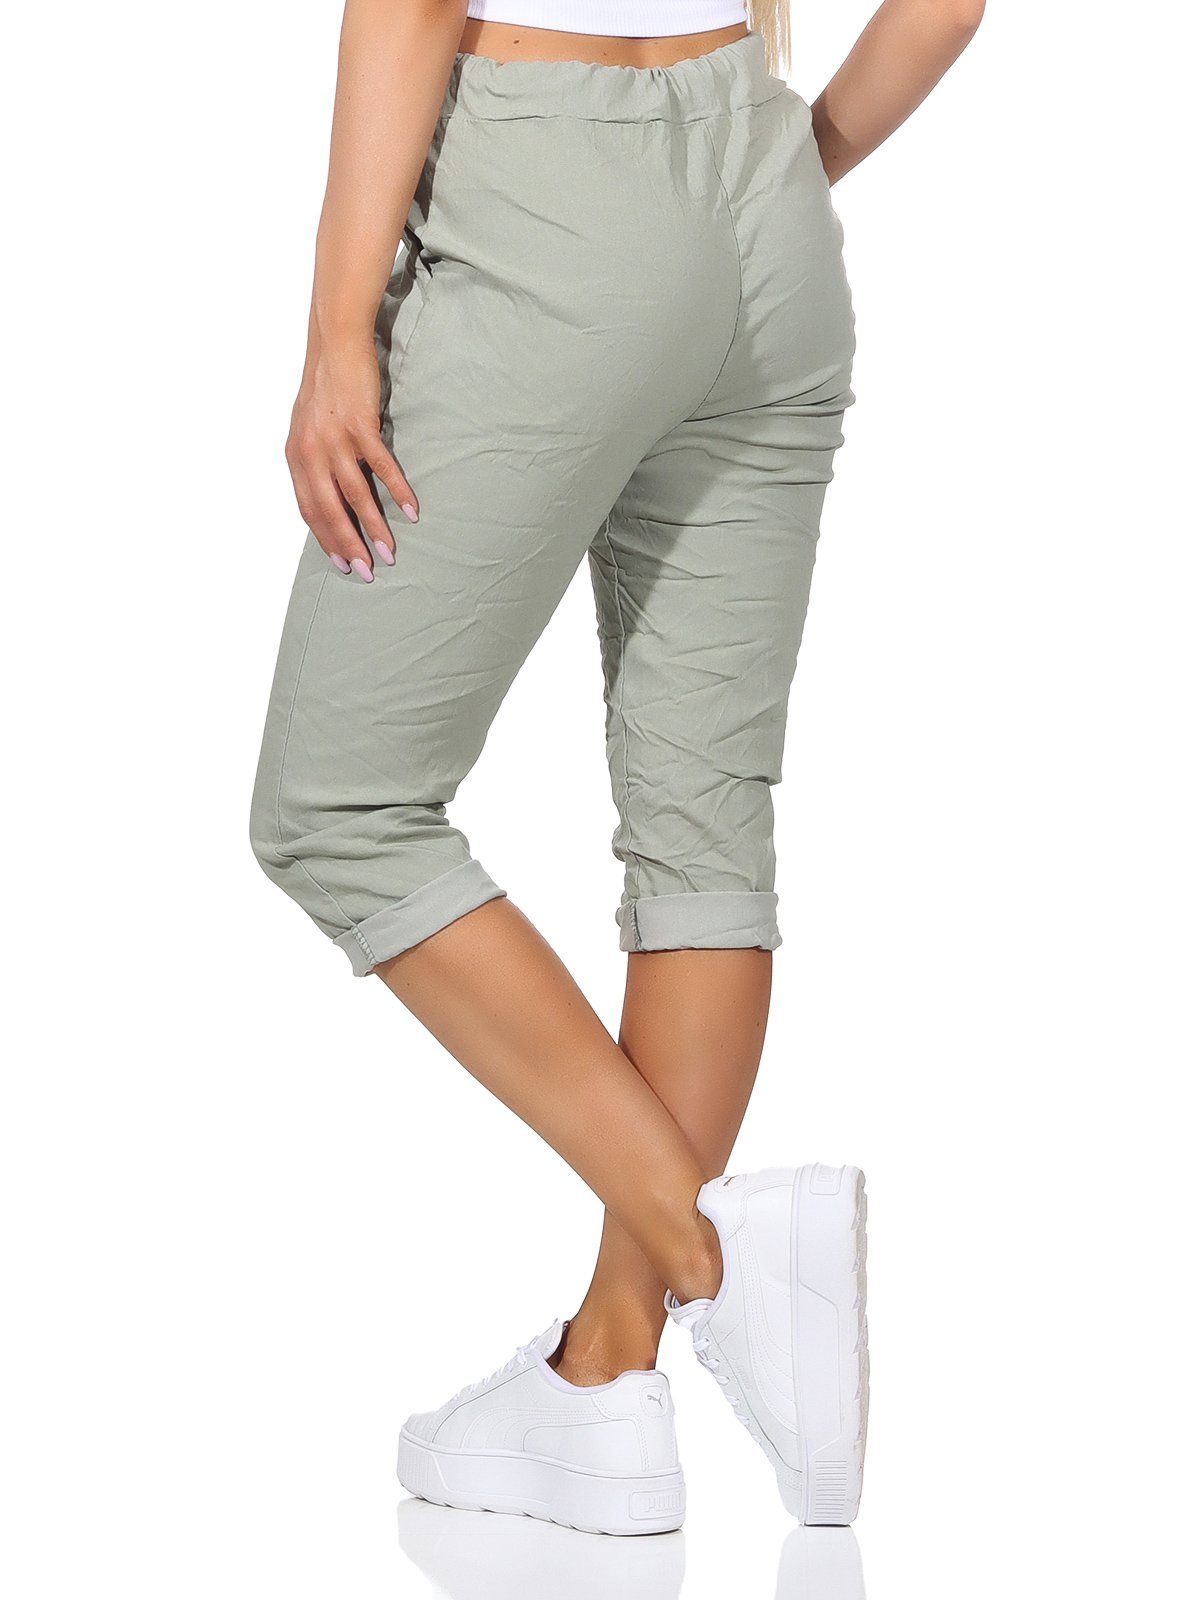 sommerlichen Kurze Khaki Damenmode Jeans in 36-44 Bermuda und Capri Farben, 7/8-Hose Taschen Sommerhose Hose Kordelzug, Aurela Damen